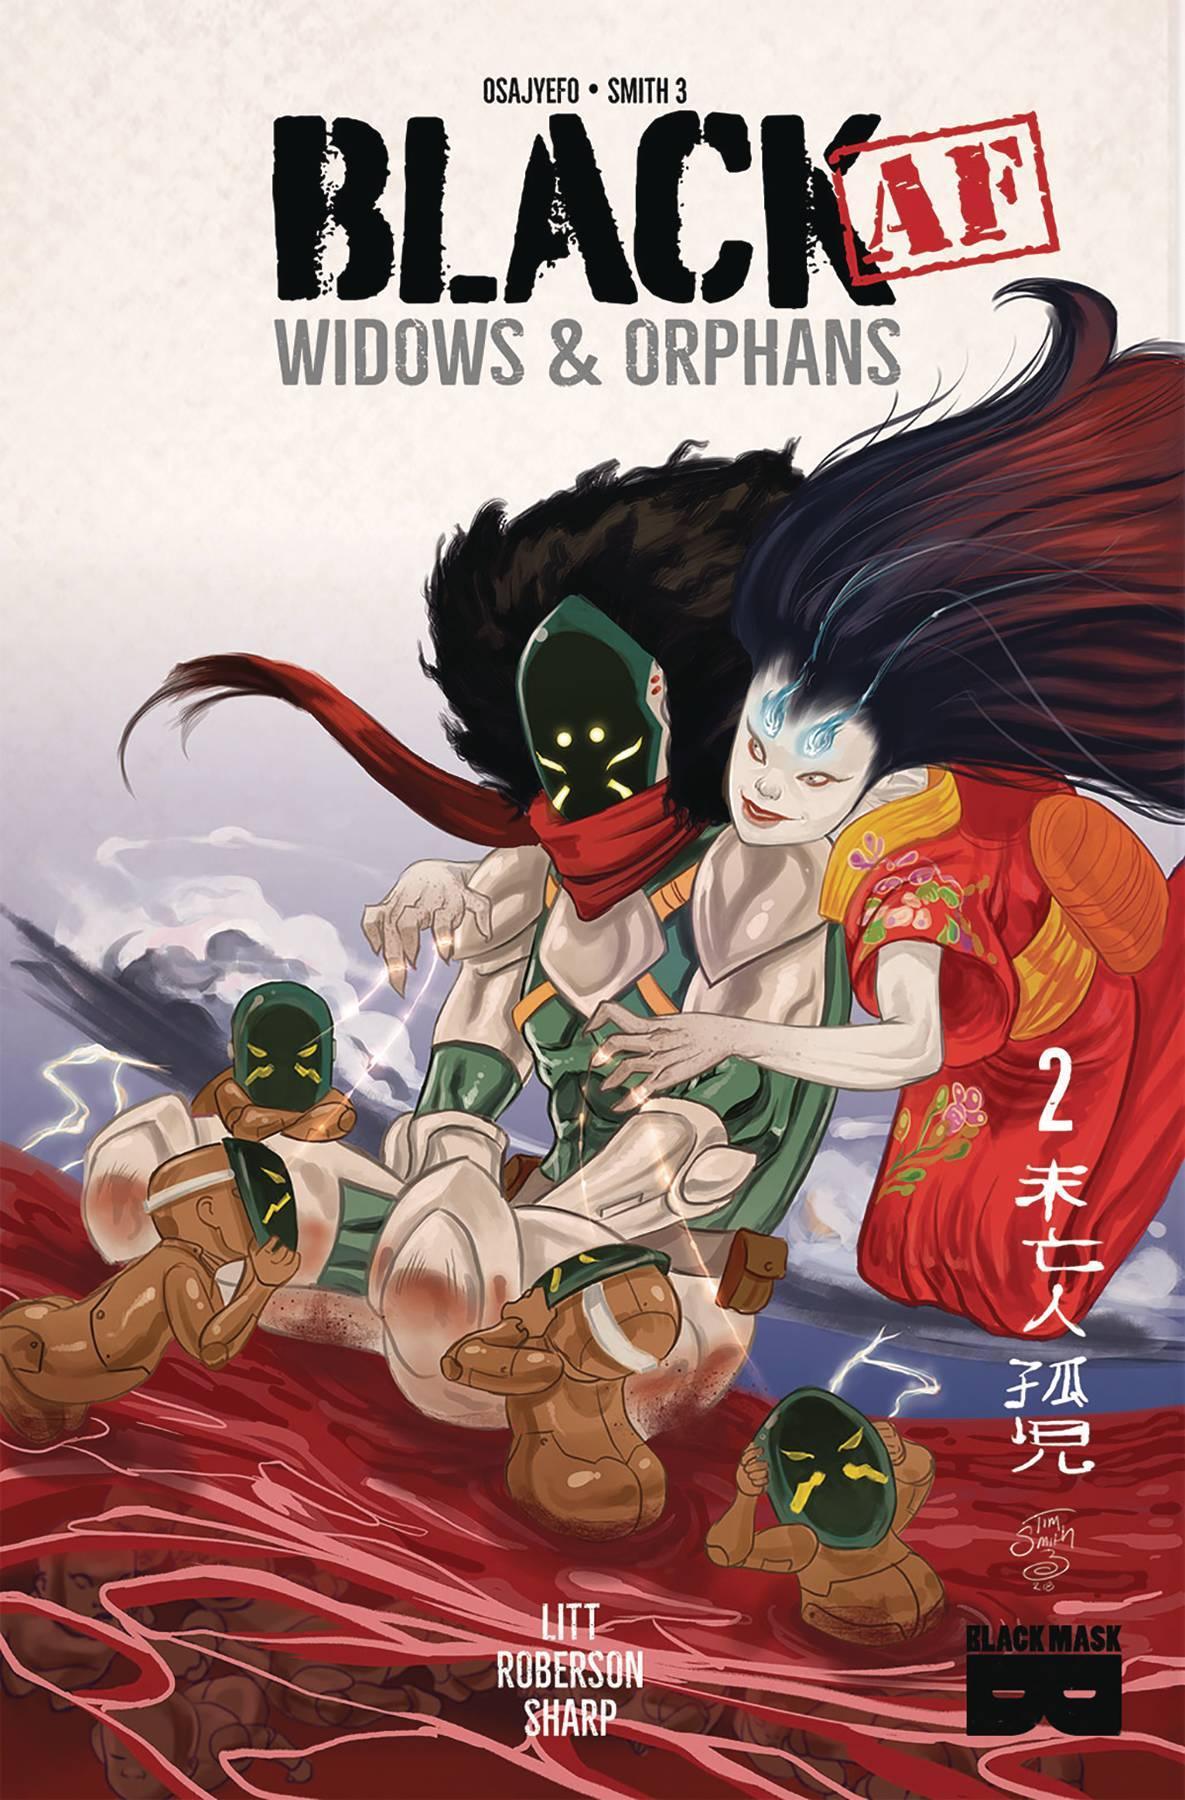 BLACK AF WIDOWS & ORPHANS #2 - Kings Comics